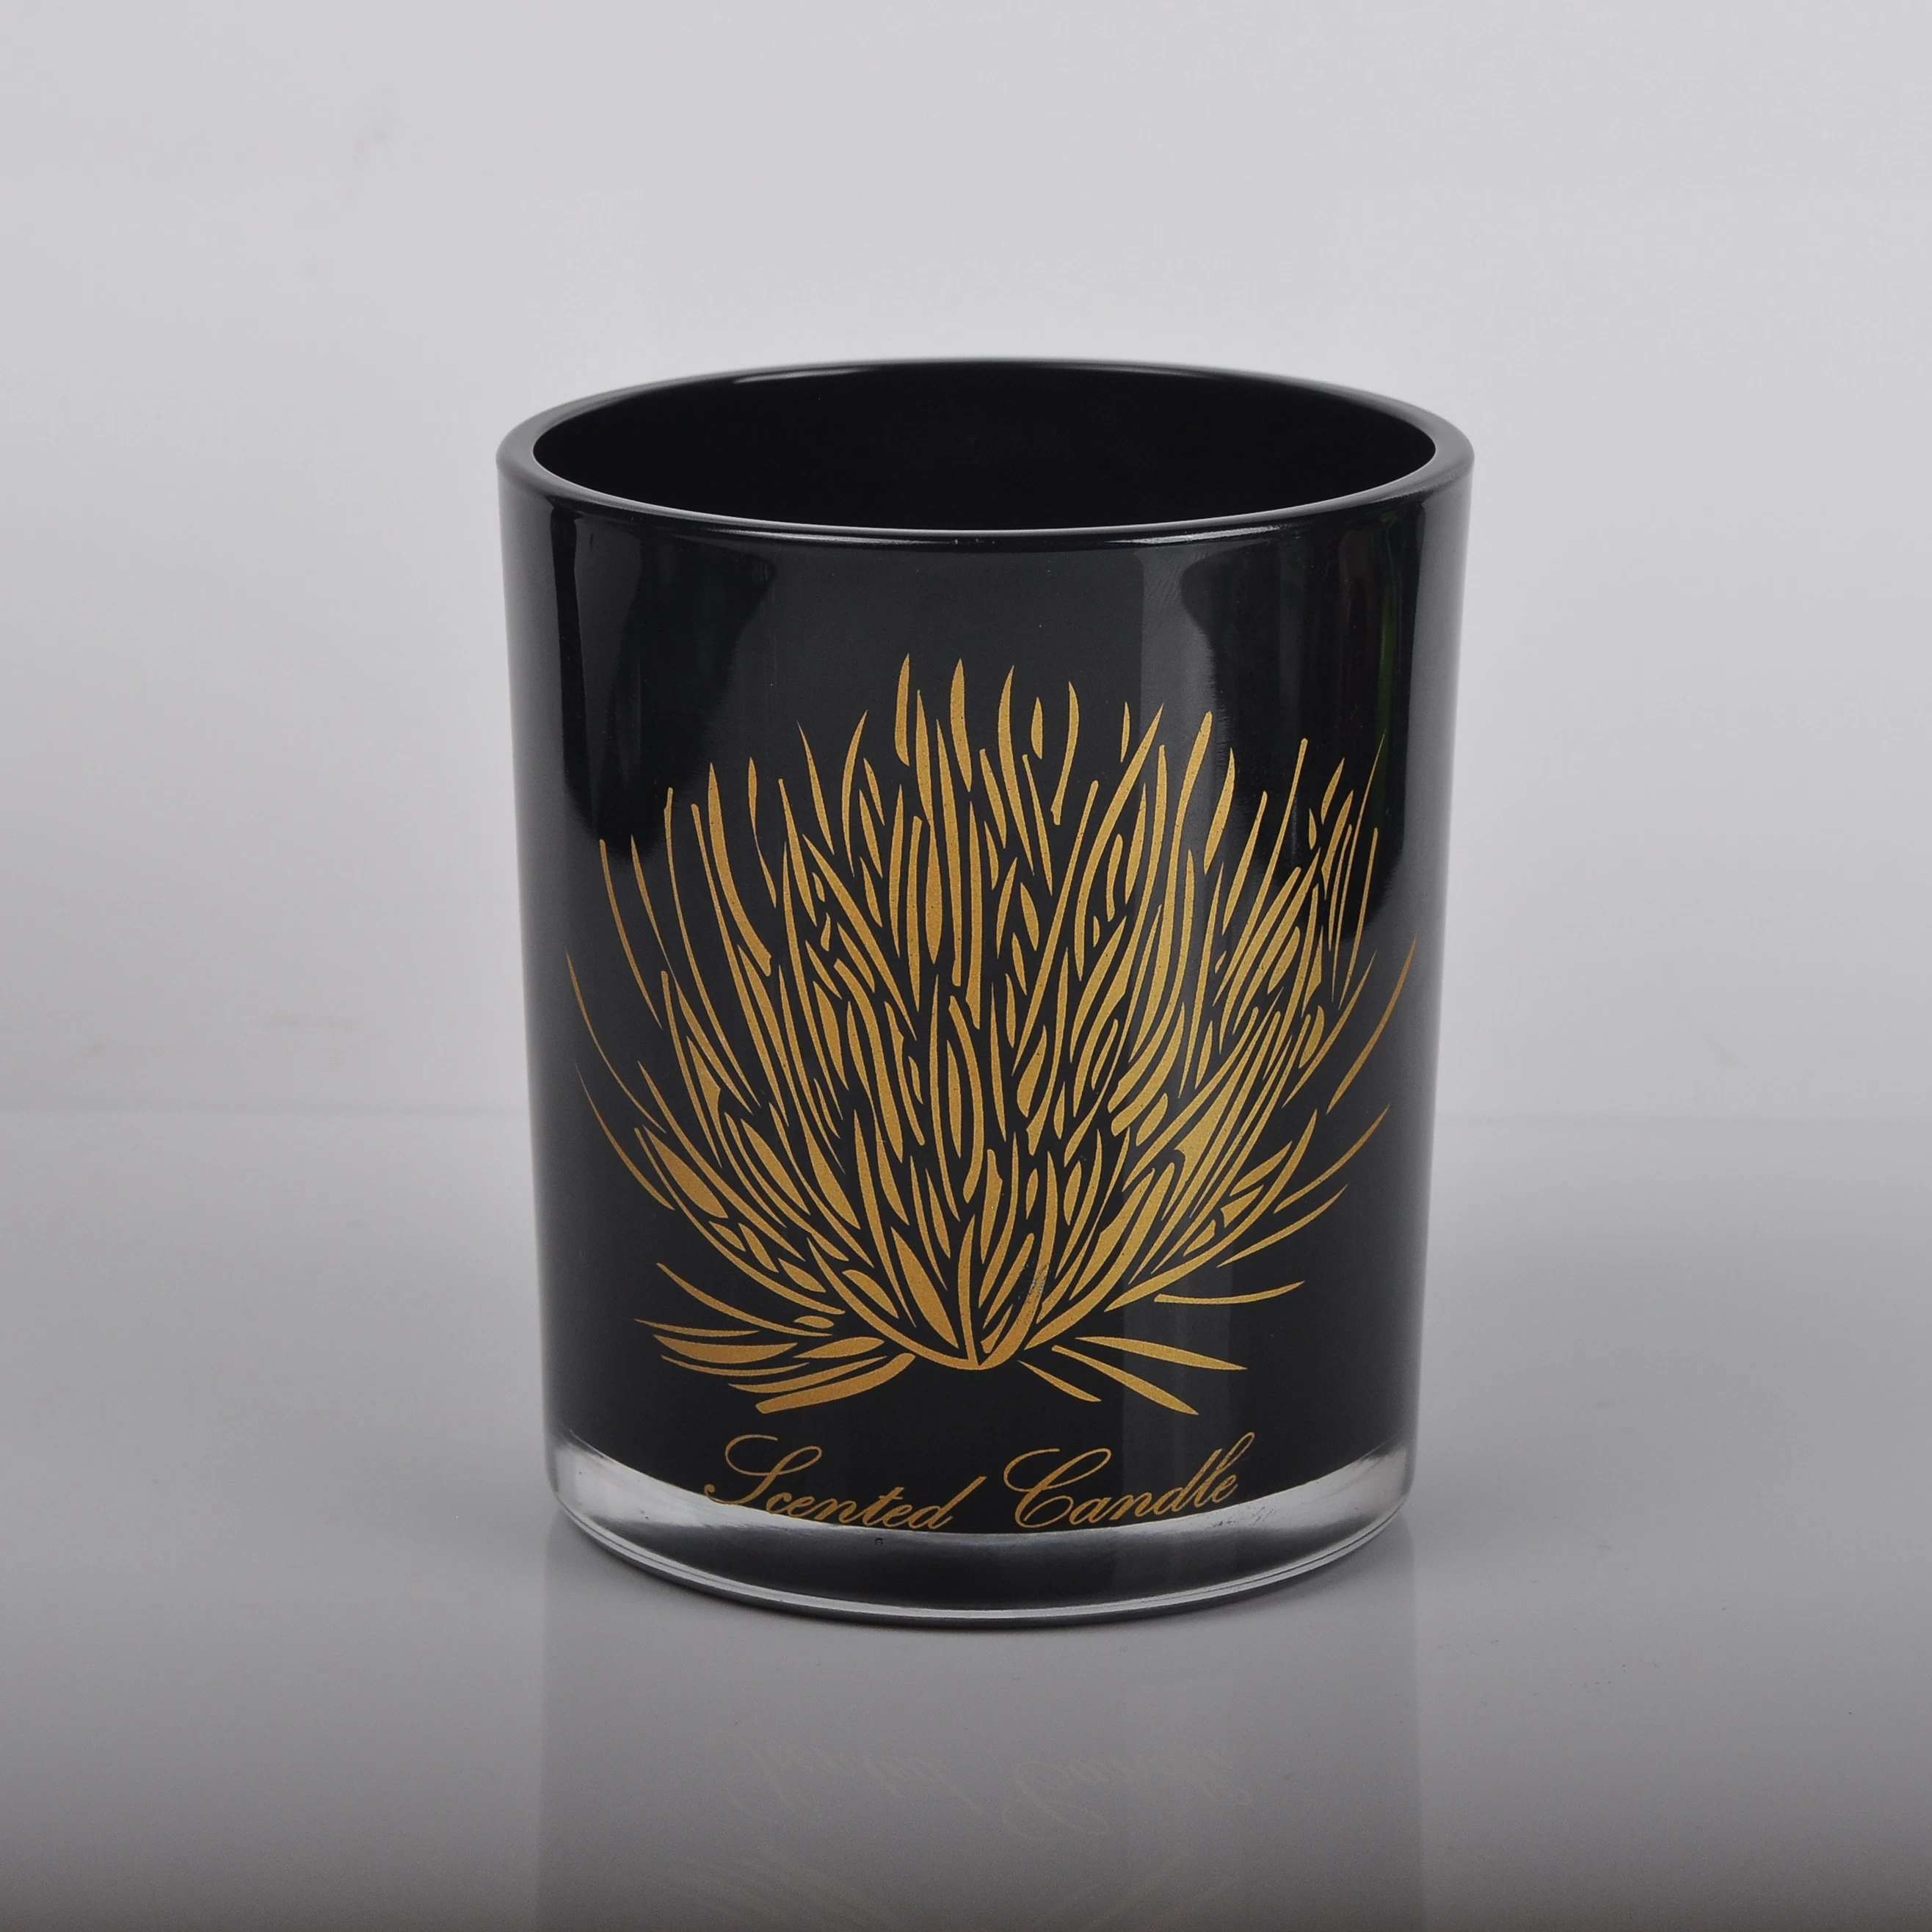 Sunny luxury black custom pattern glass candle holders